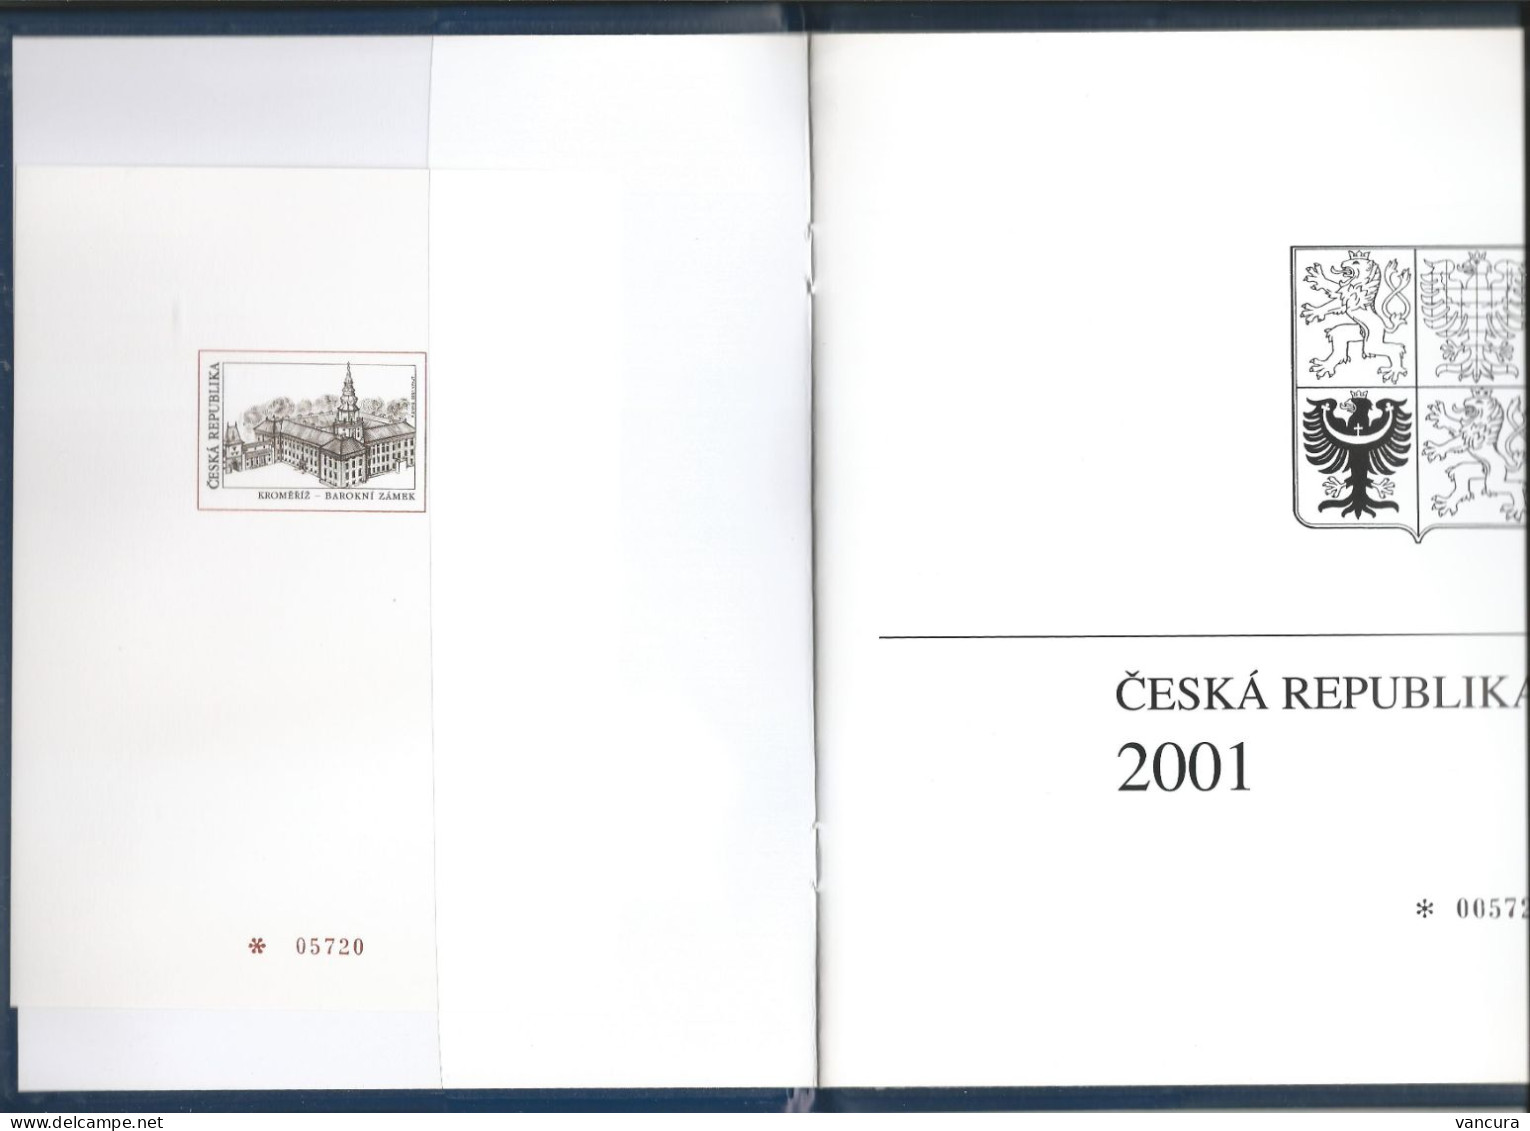 Czech Republic Year Book 2001 (with blackprint)